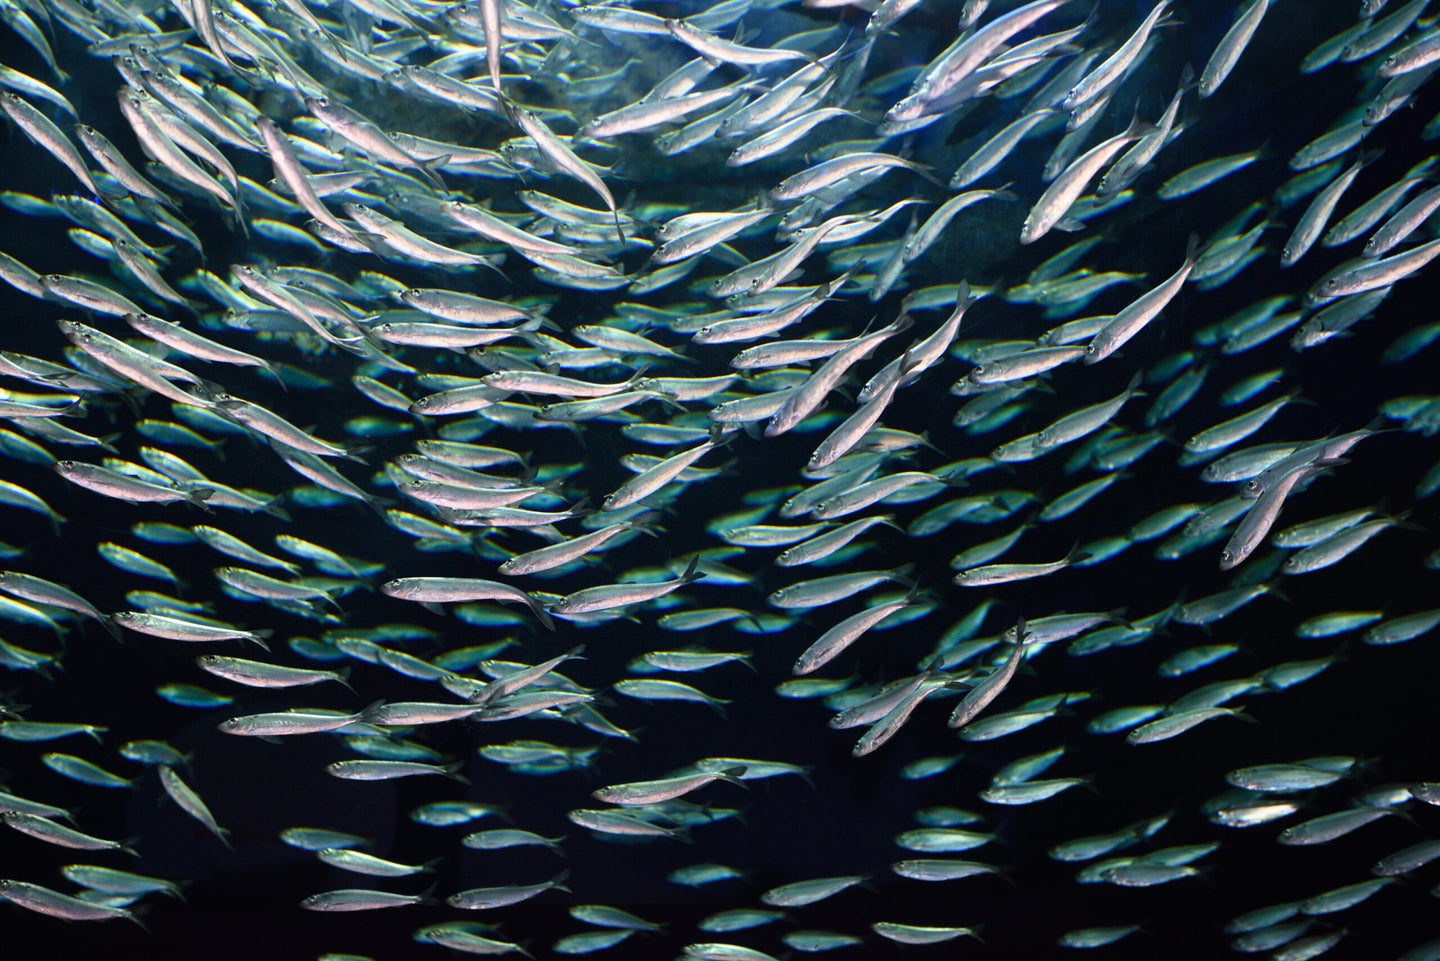 School of circling Alewives herring fish.